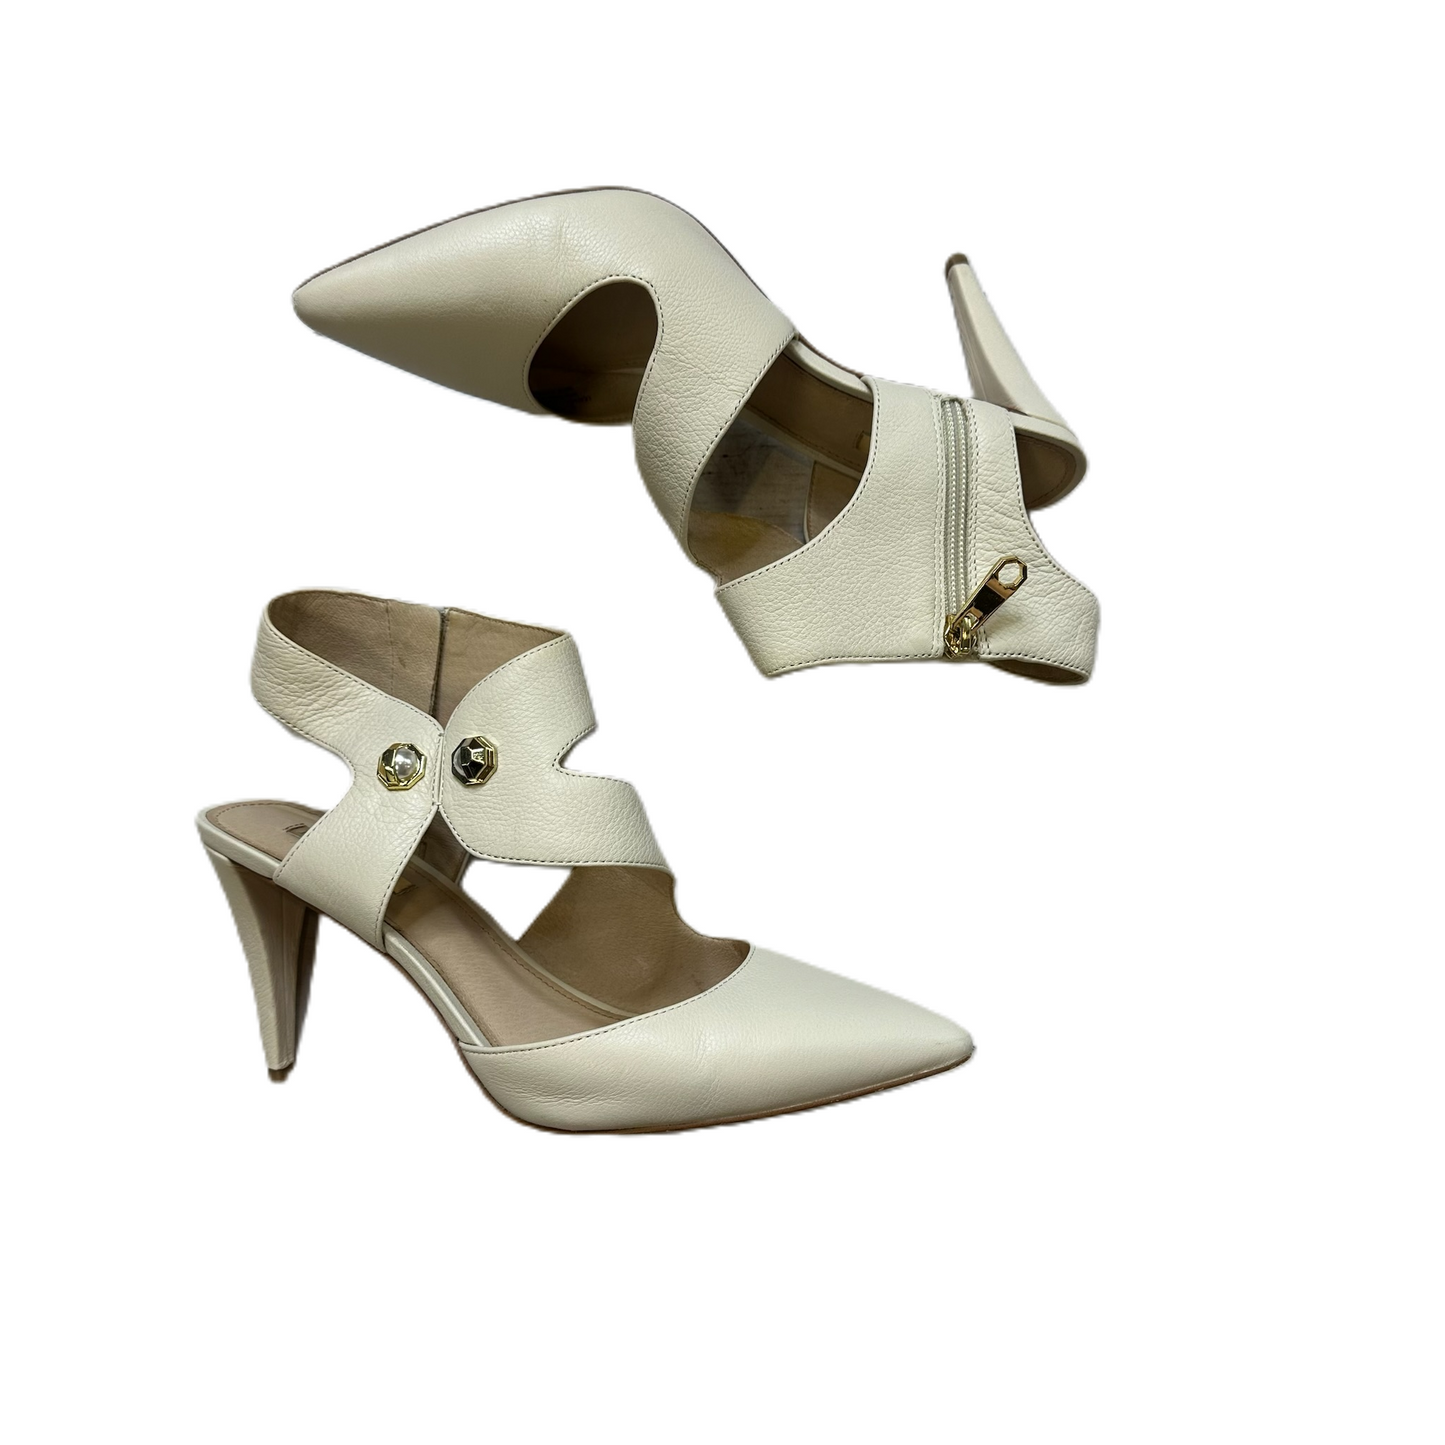 Cream Shoes Heels Stiletto By Louise Et Cie, Size: 9.5